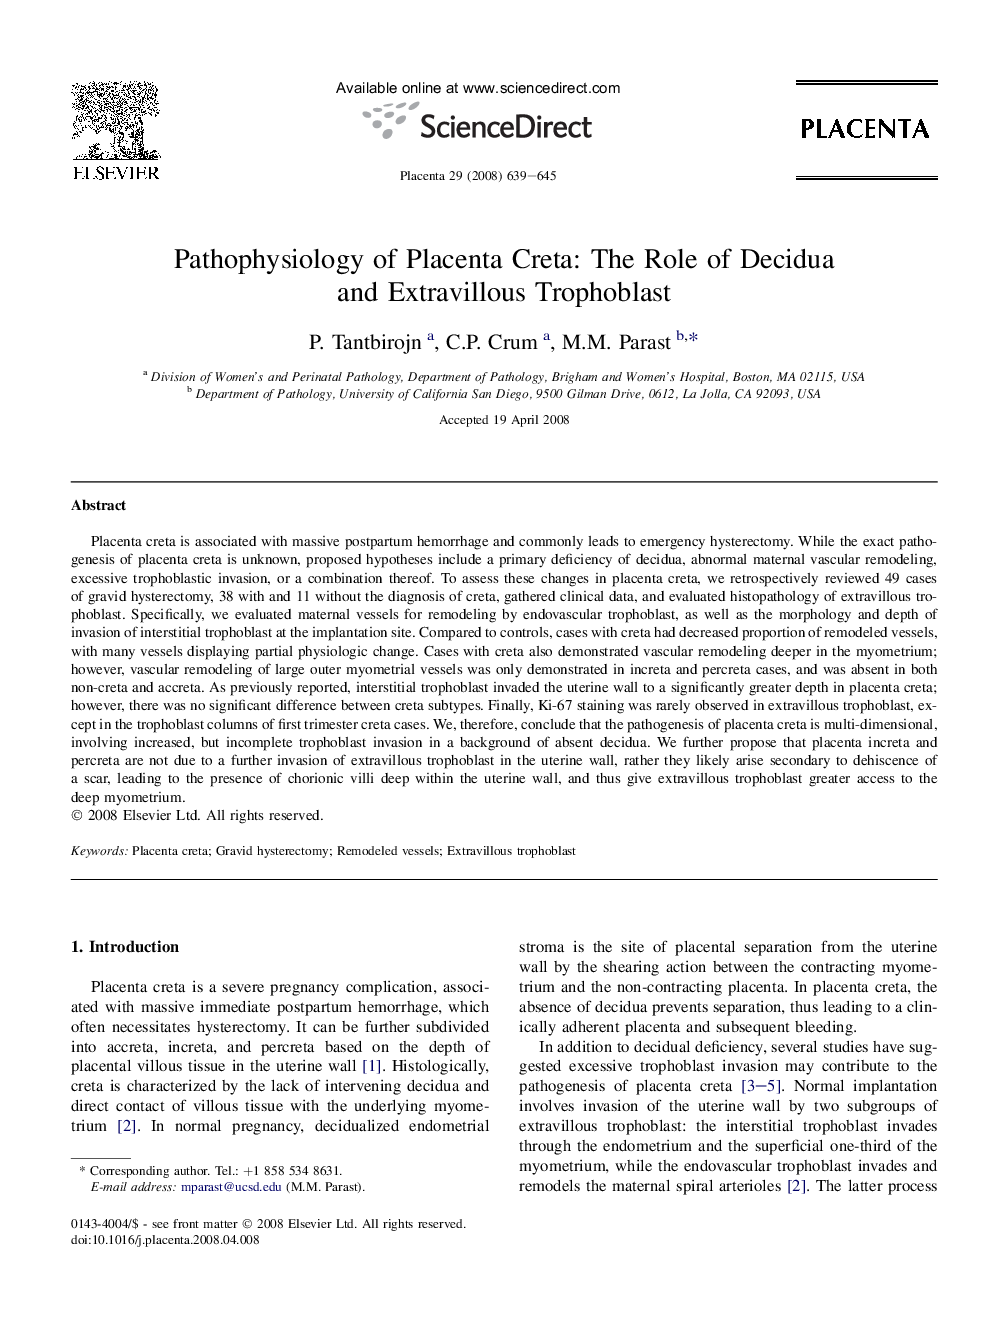 Pathophysiology of Placenta Creta: The Role of Decidua and Extravillous Trophoblast